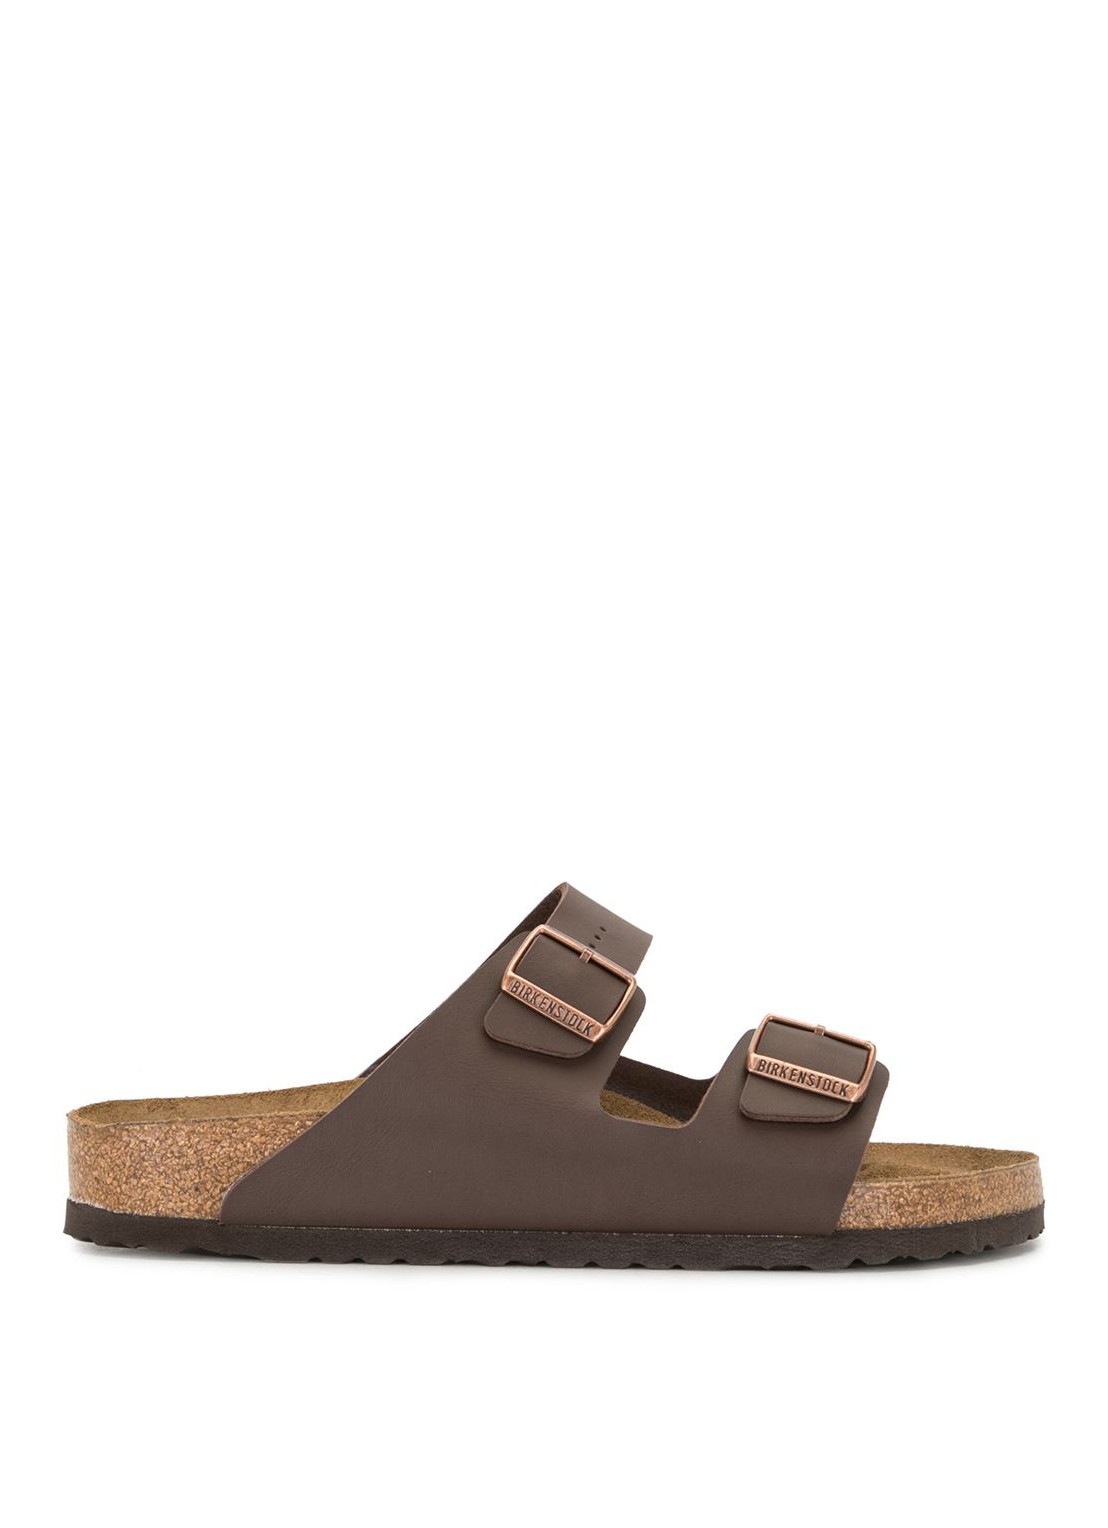 Sandalia birkenstock sandal man arizona 51701 dark brown talla marron
 